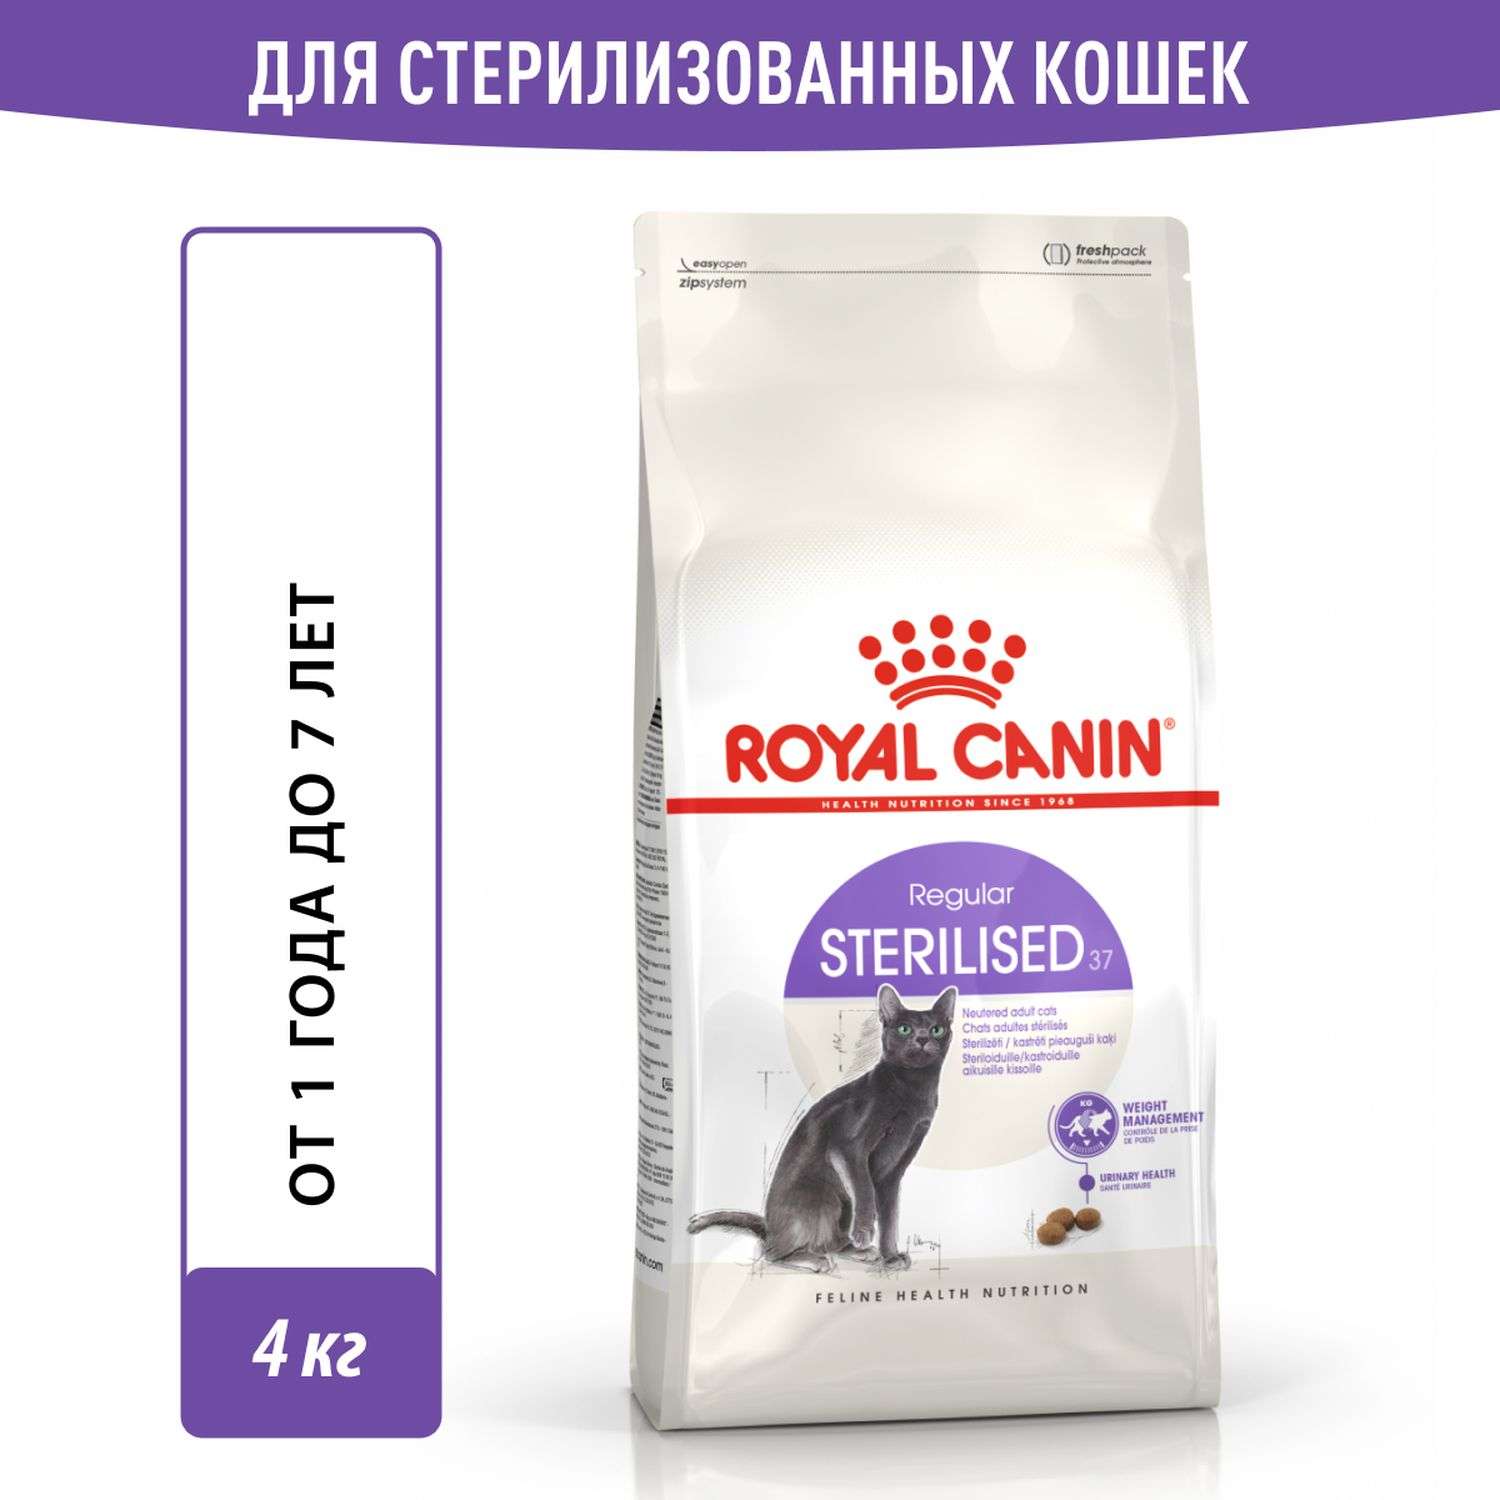 Корм сухой ROYAL CANIN Sterilised 37 4кг для стерилизованных кошек - фото 1